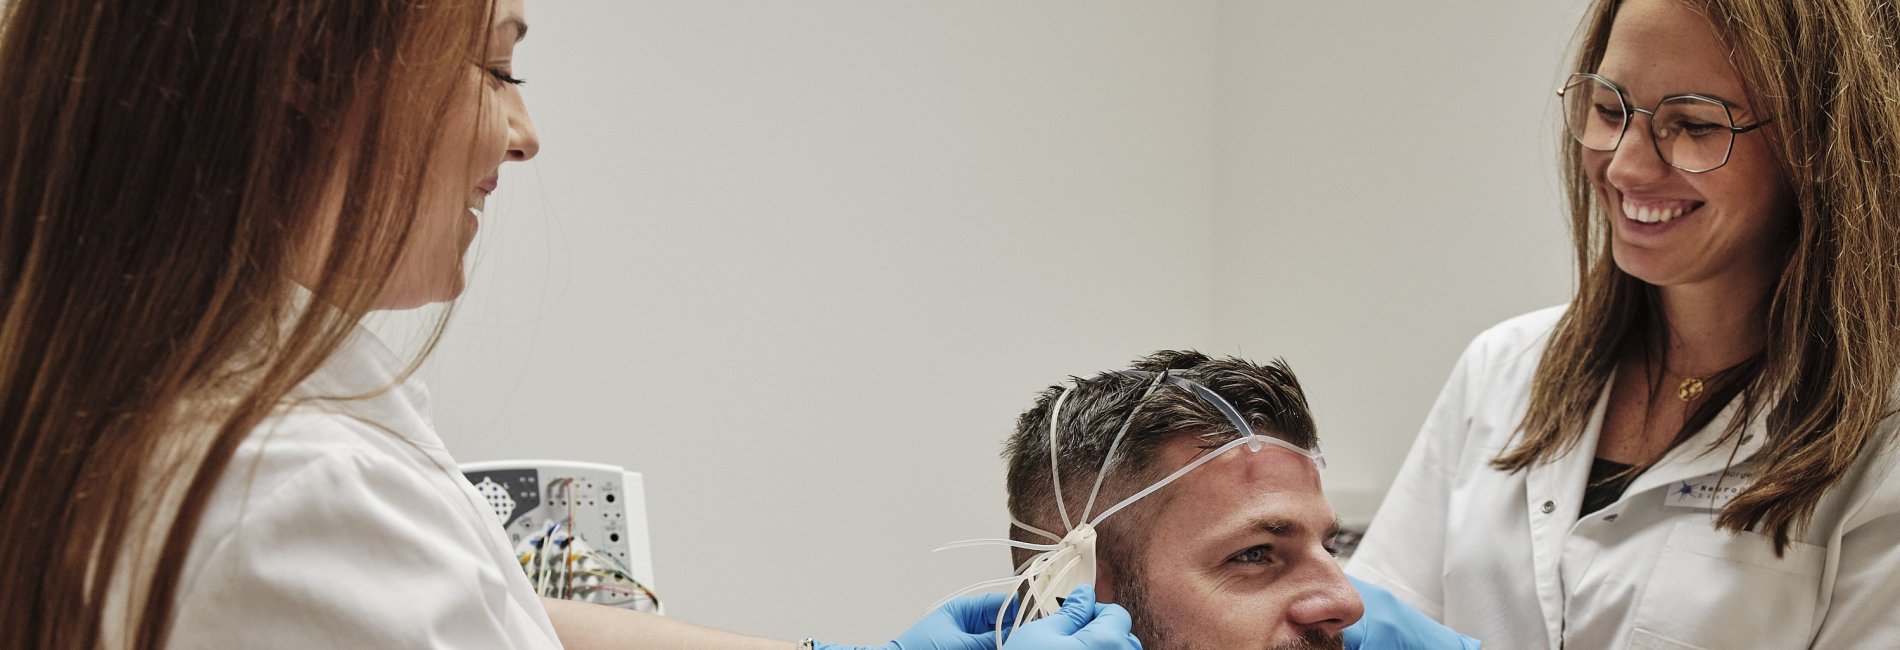 Electroencephalogram (EEG)